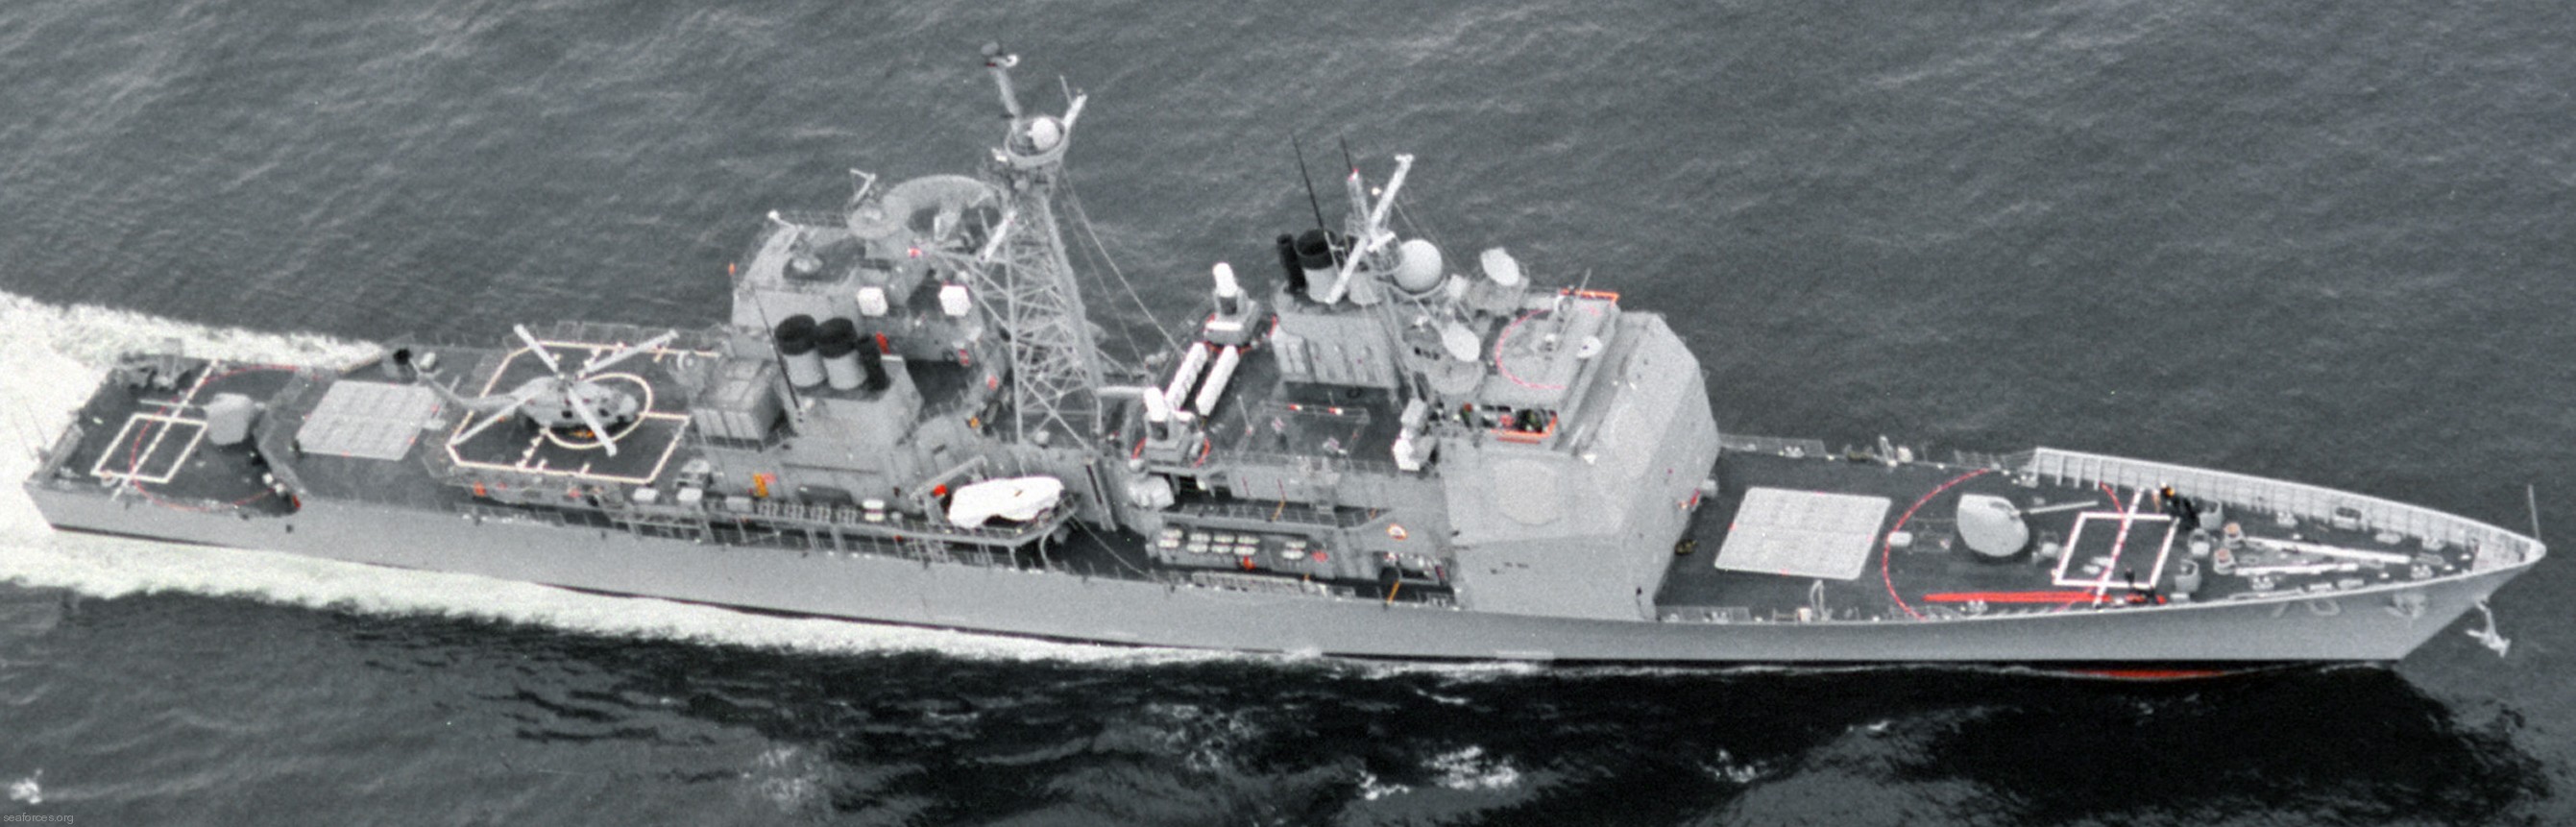 cg-70 uss lake erie ticonderoga class guided missile cruiser navy 82